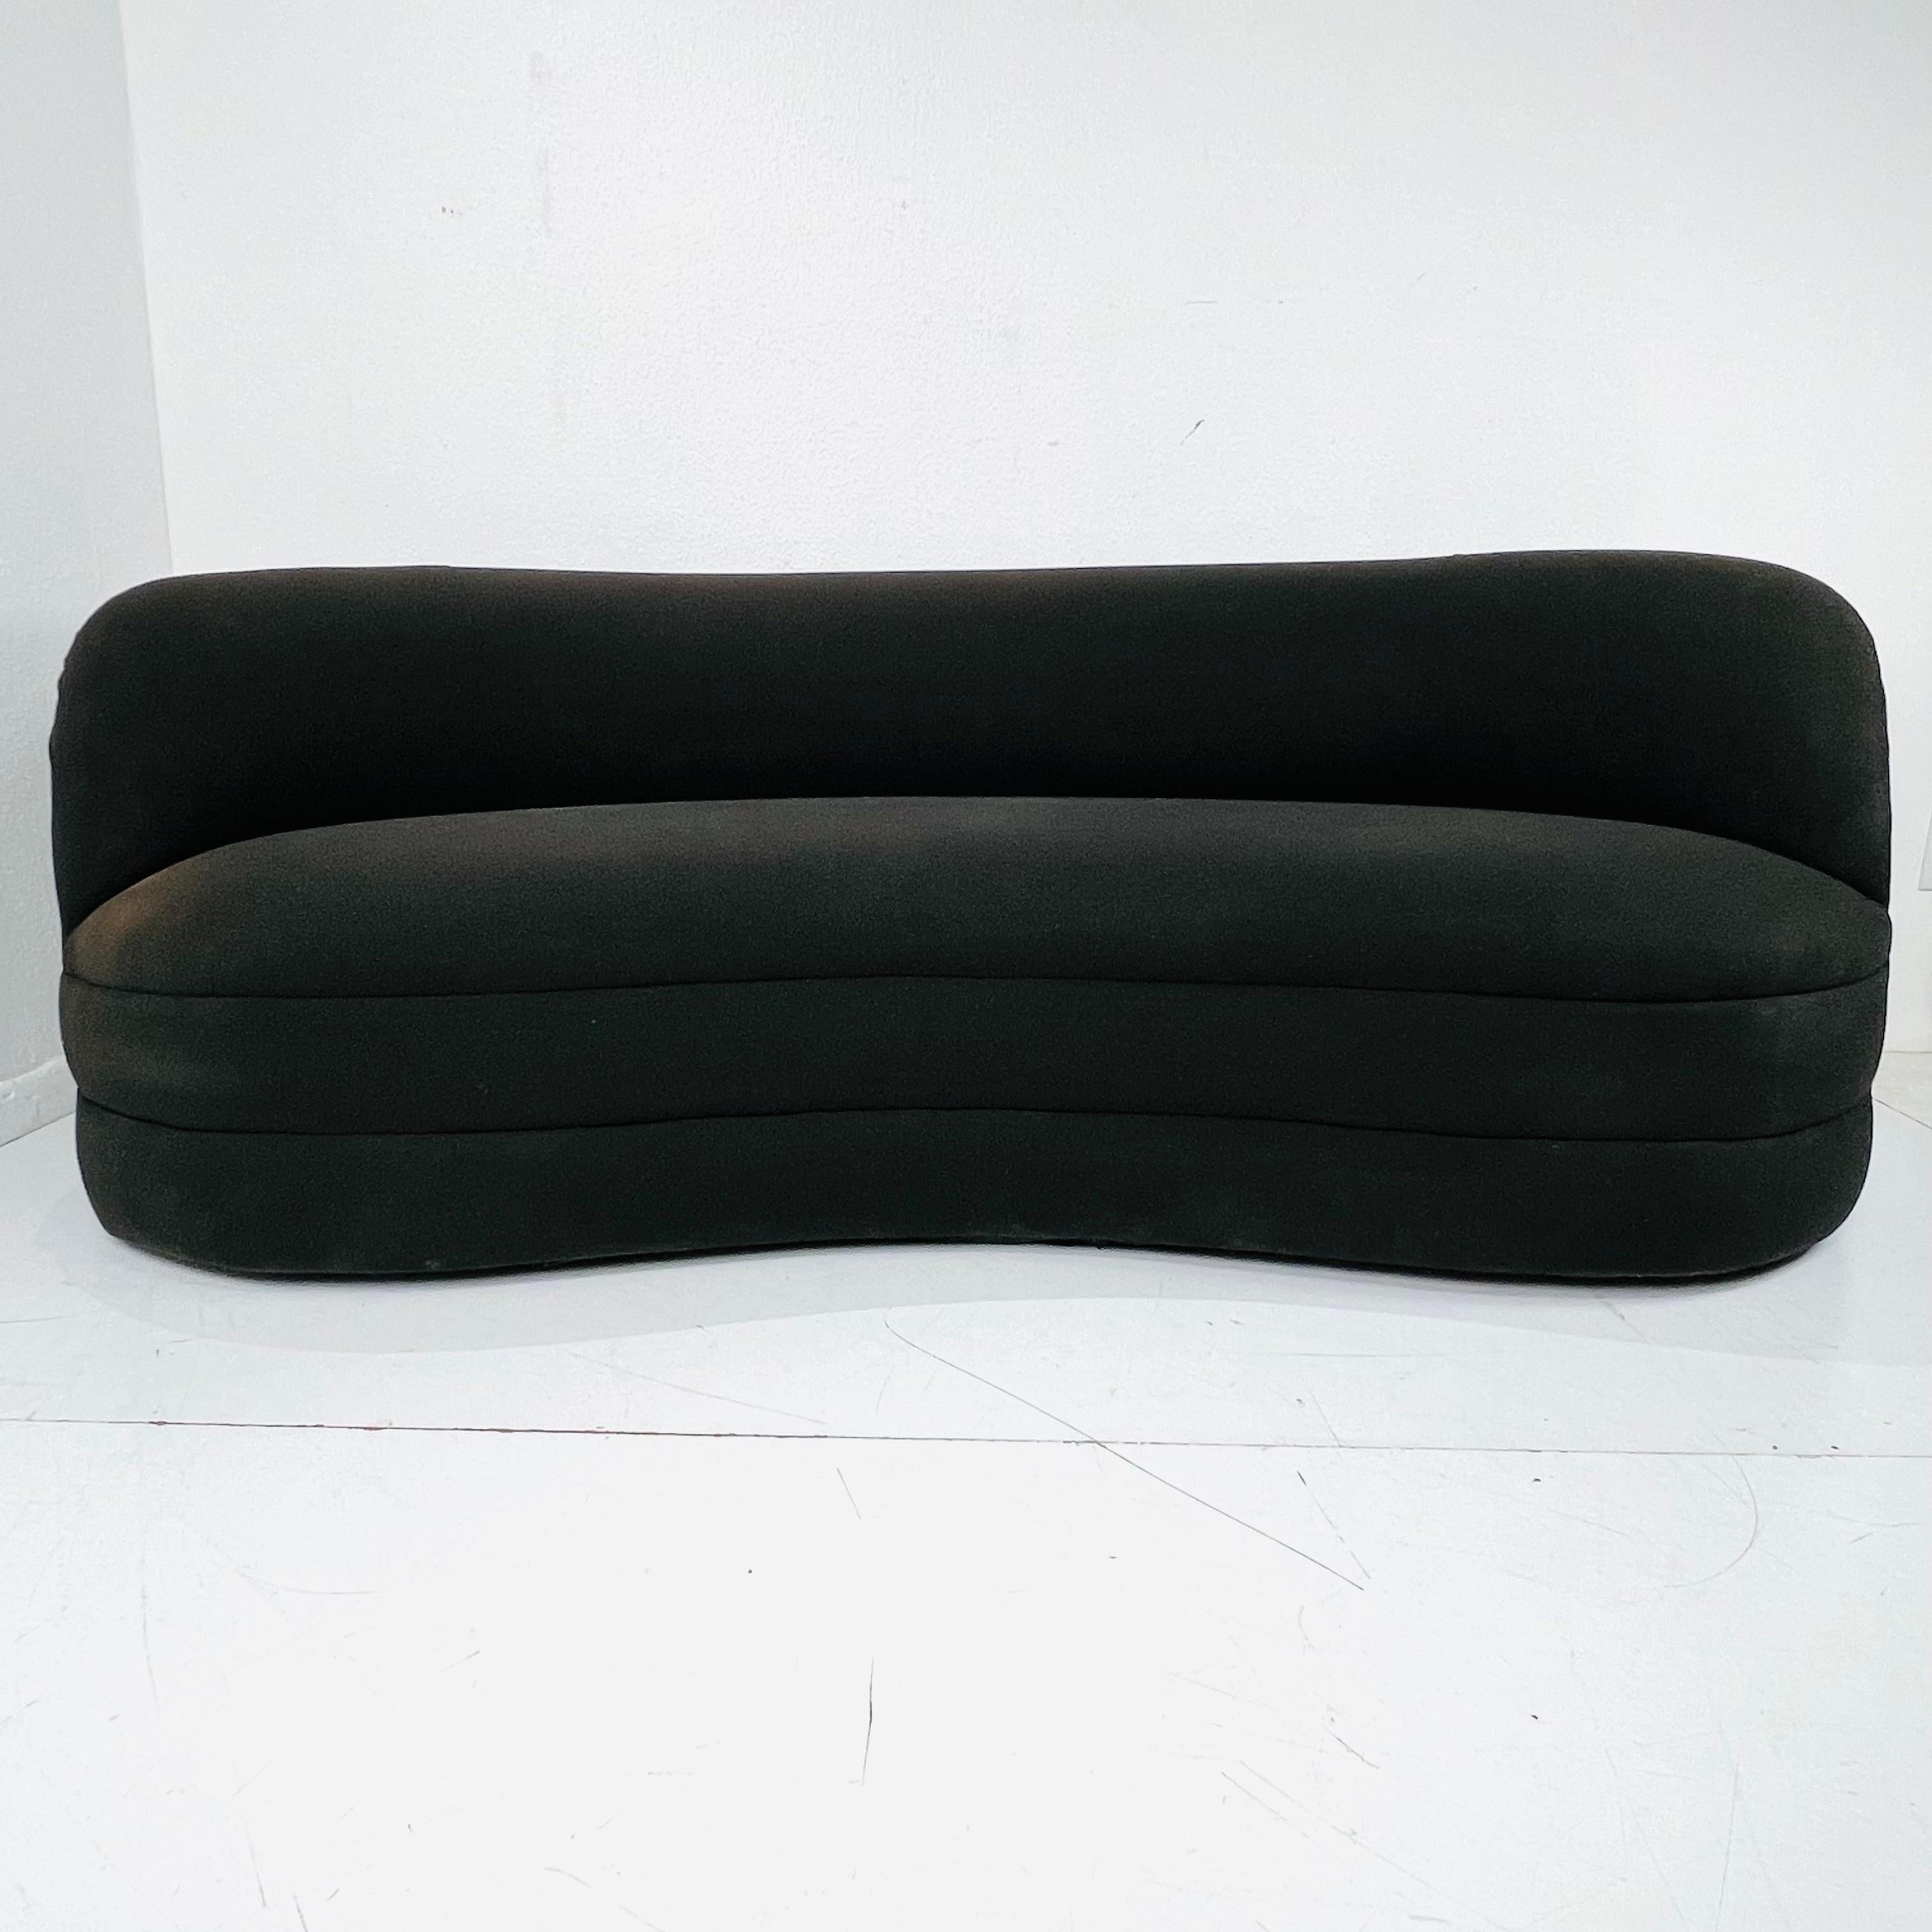 Midcentury kidney sofa in the style of Vladimir Kagan. This sofa measures: 86